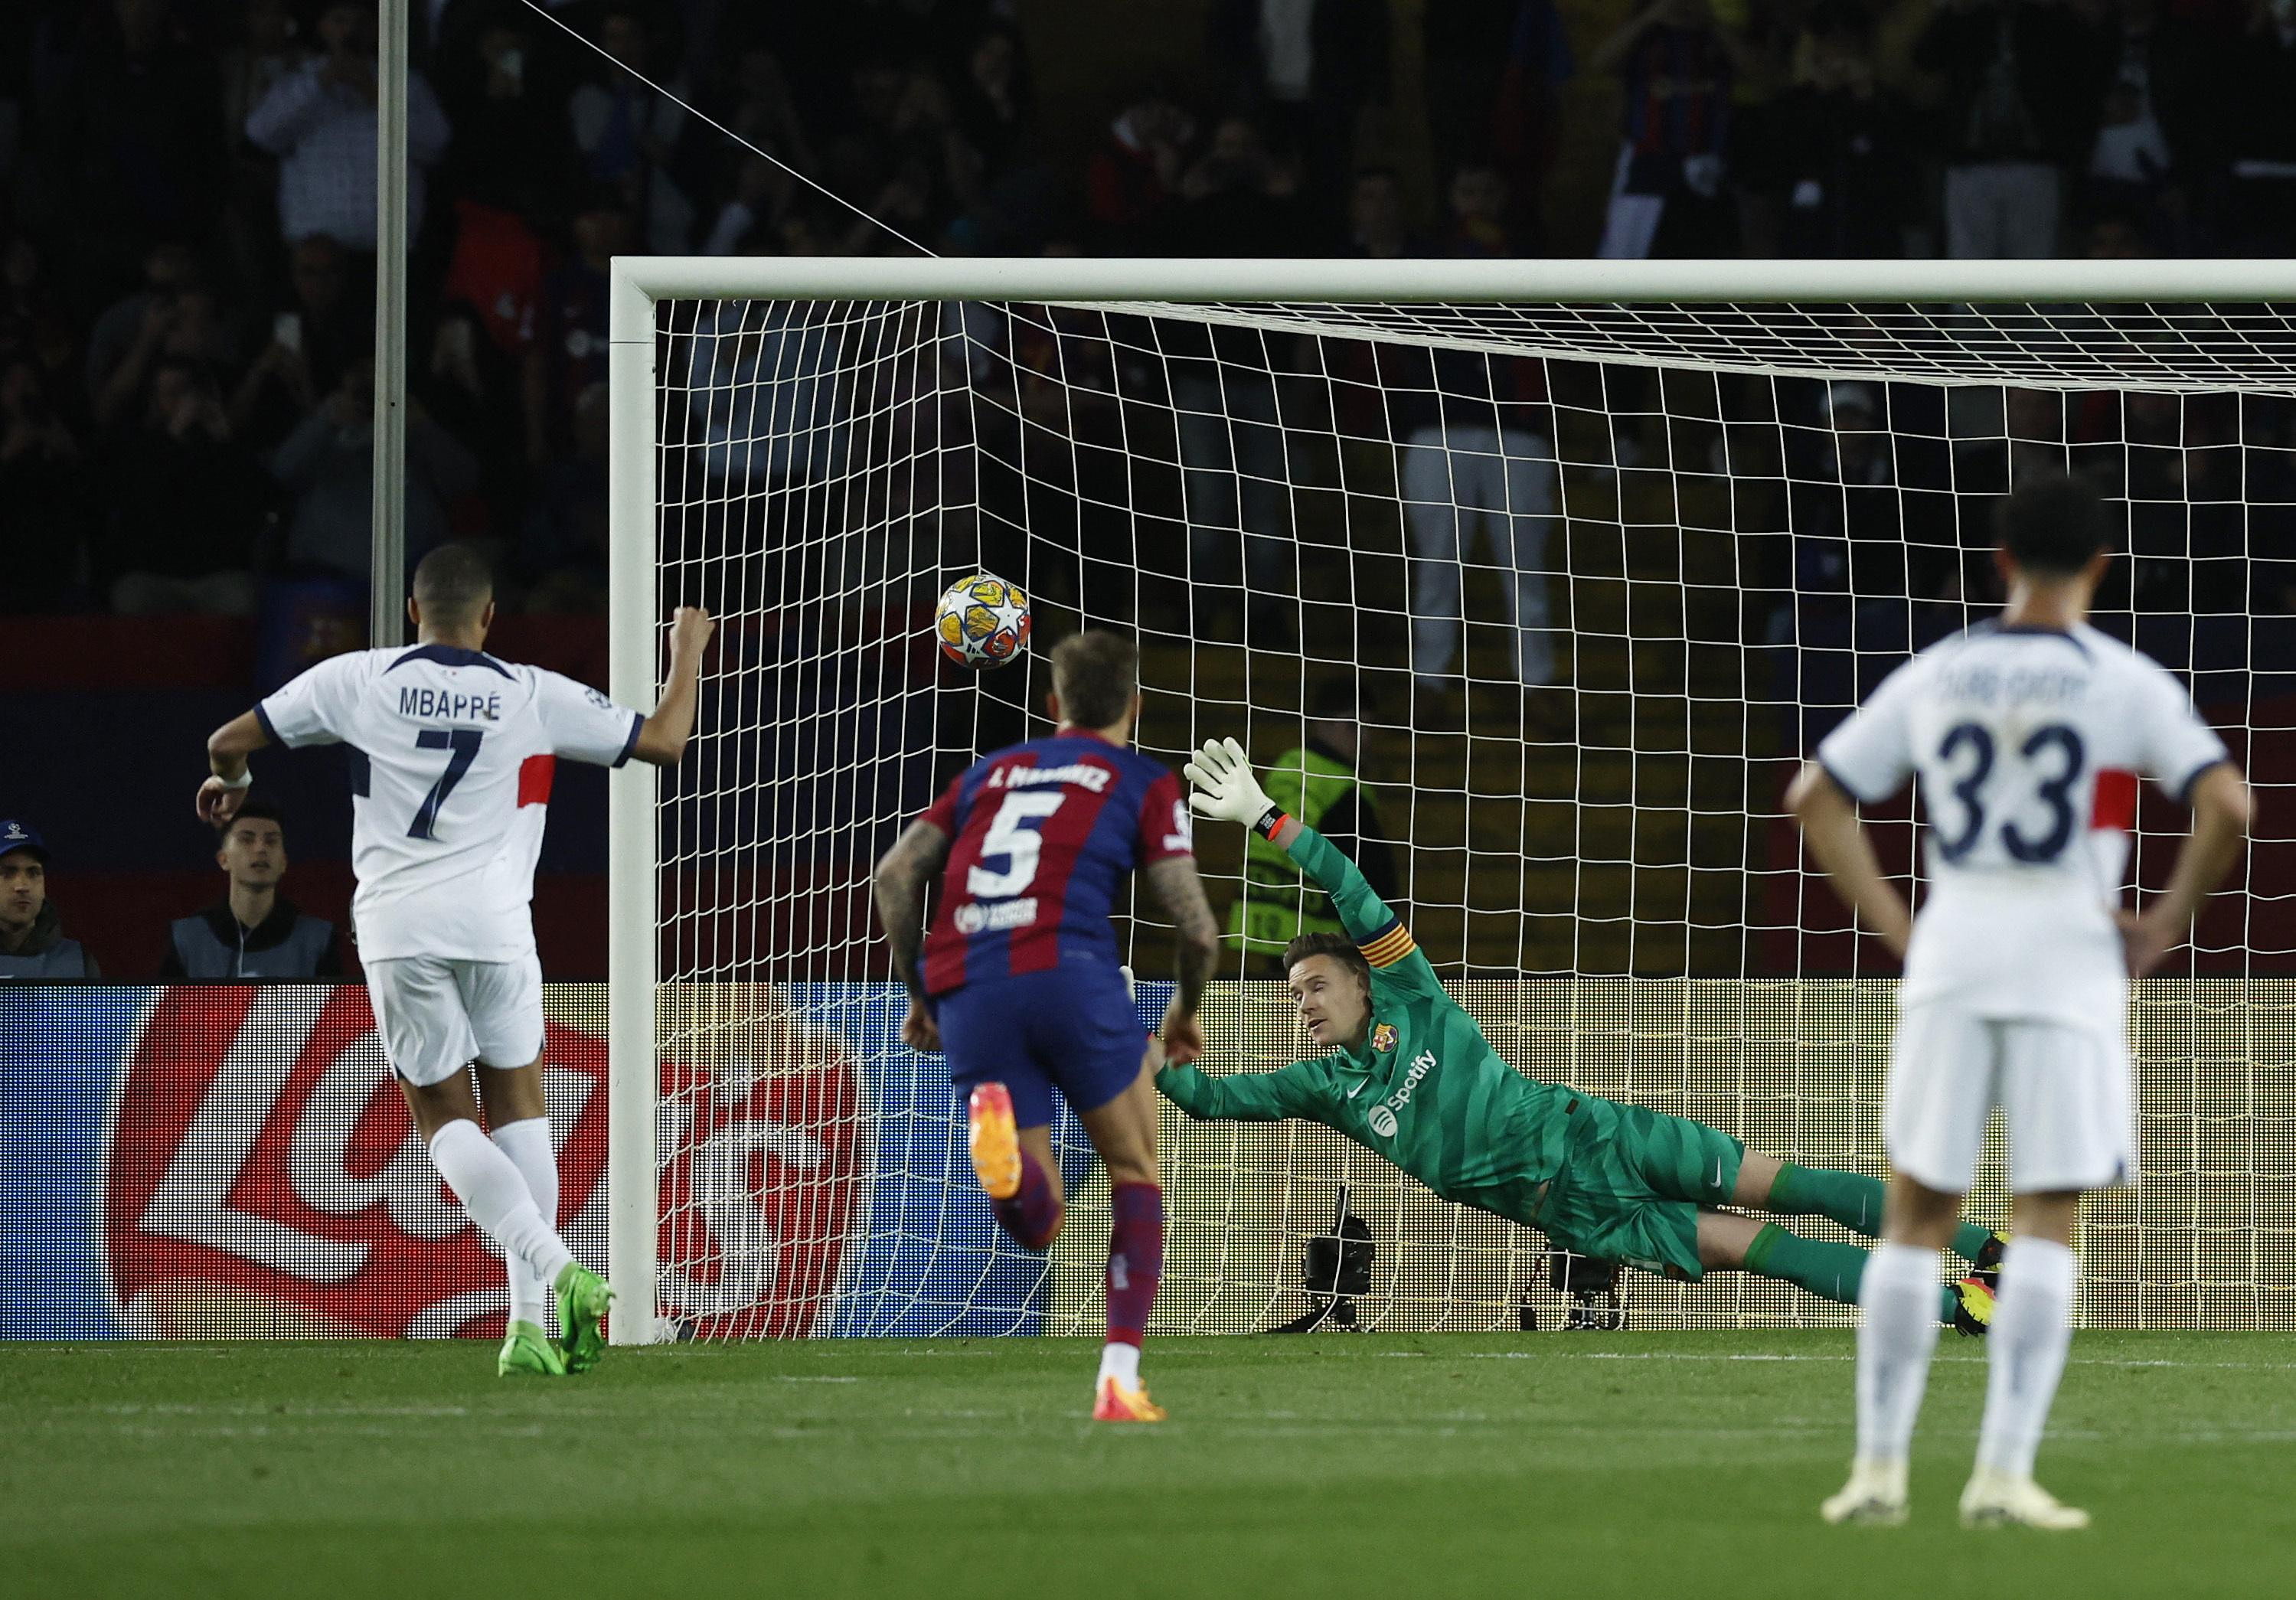 Barcelona-PSG: in video, Mbappé’s penalty